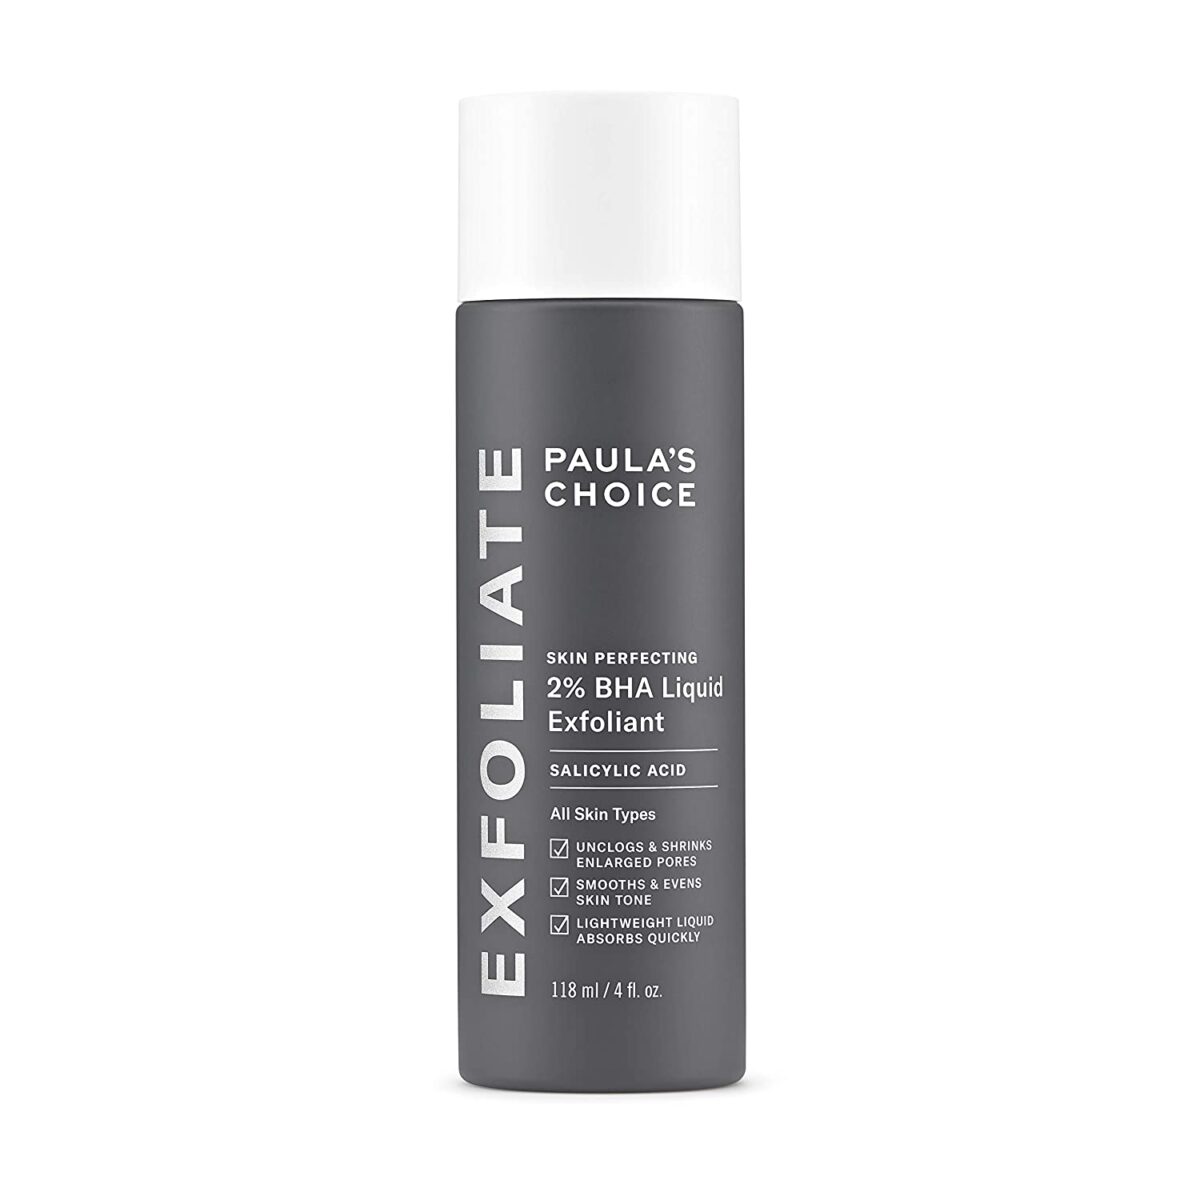 Paulas Choice SKIN PERFECTING 2% BHA Liquid Salicylic Acid Exfoliant Facial Exfoliant for Blackheads, Enlarged Pores, Wrinkles & Fine Lines, 4 oz